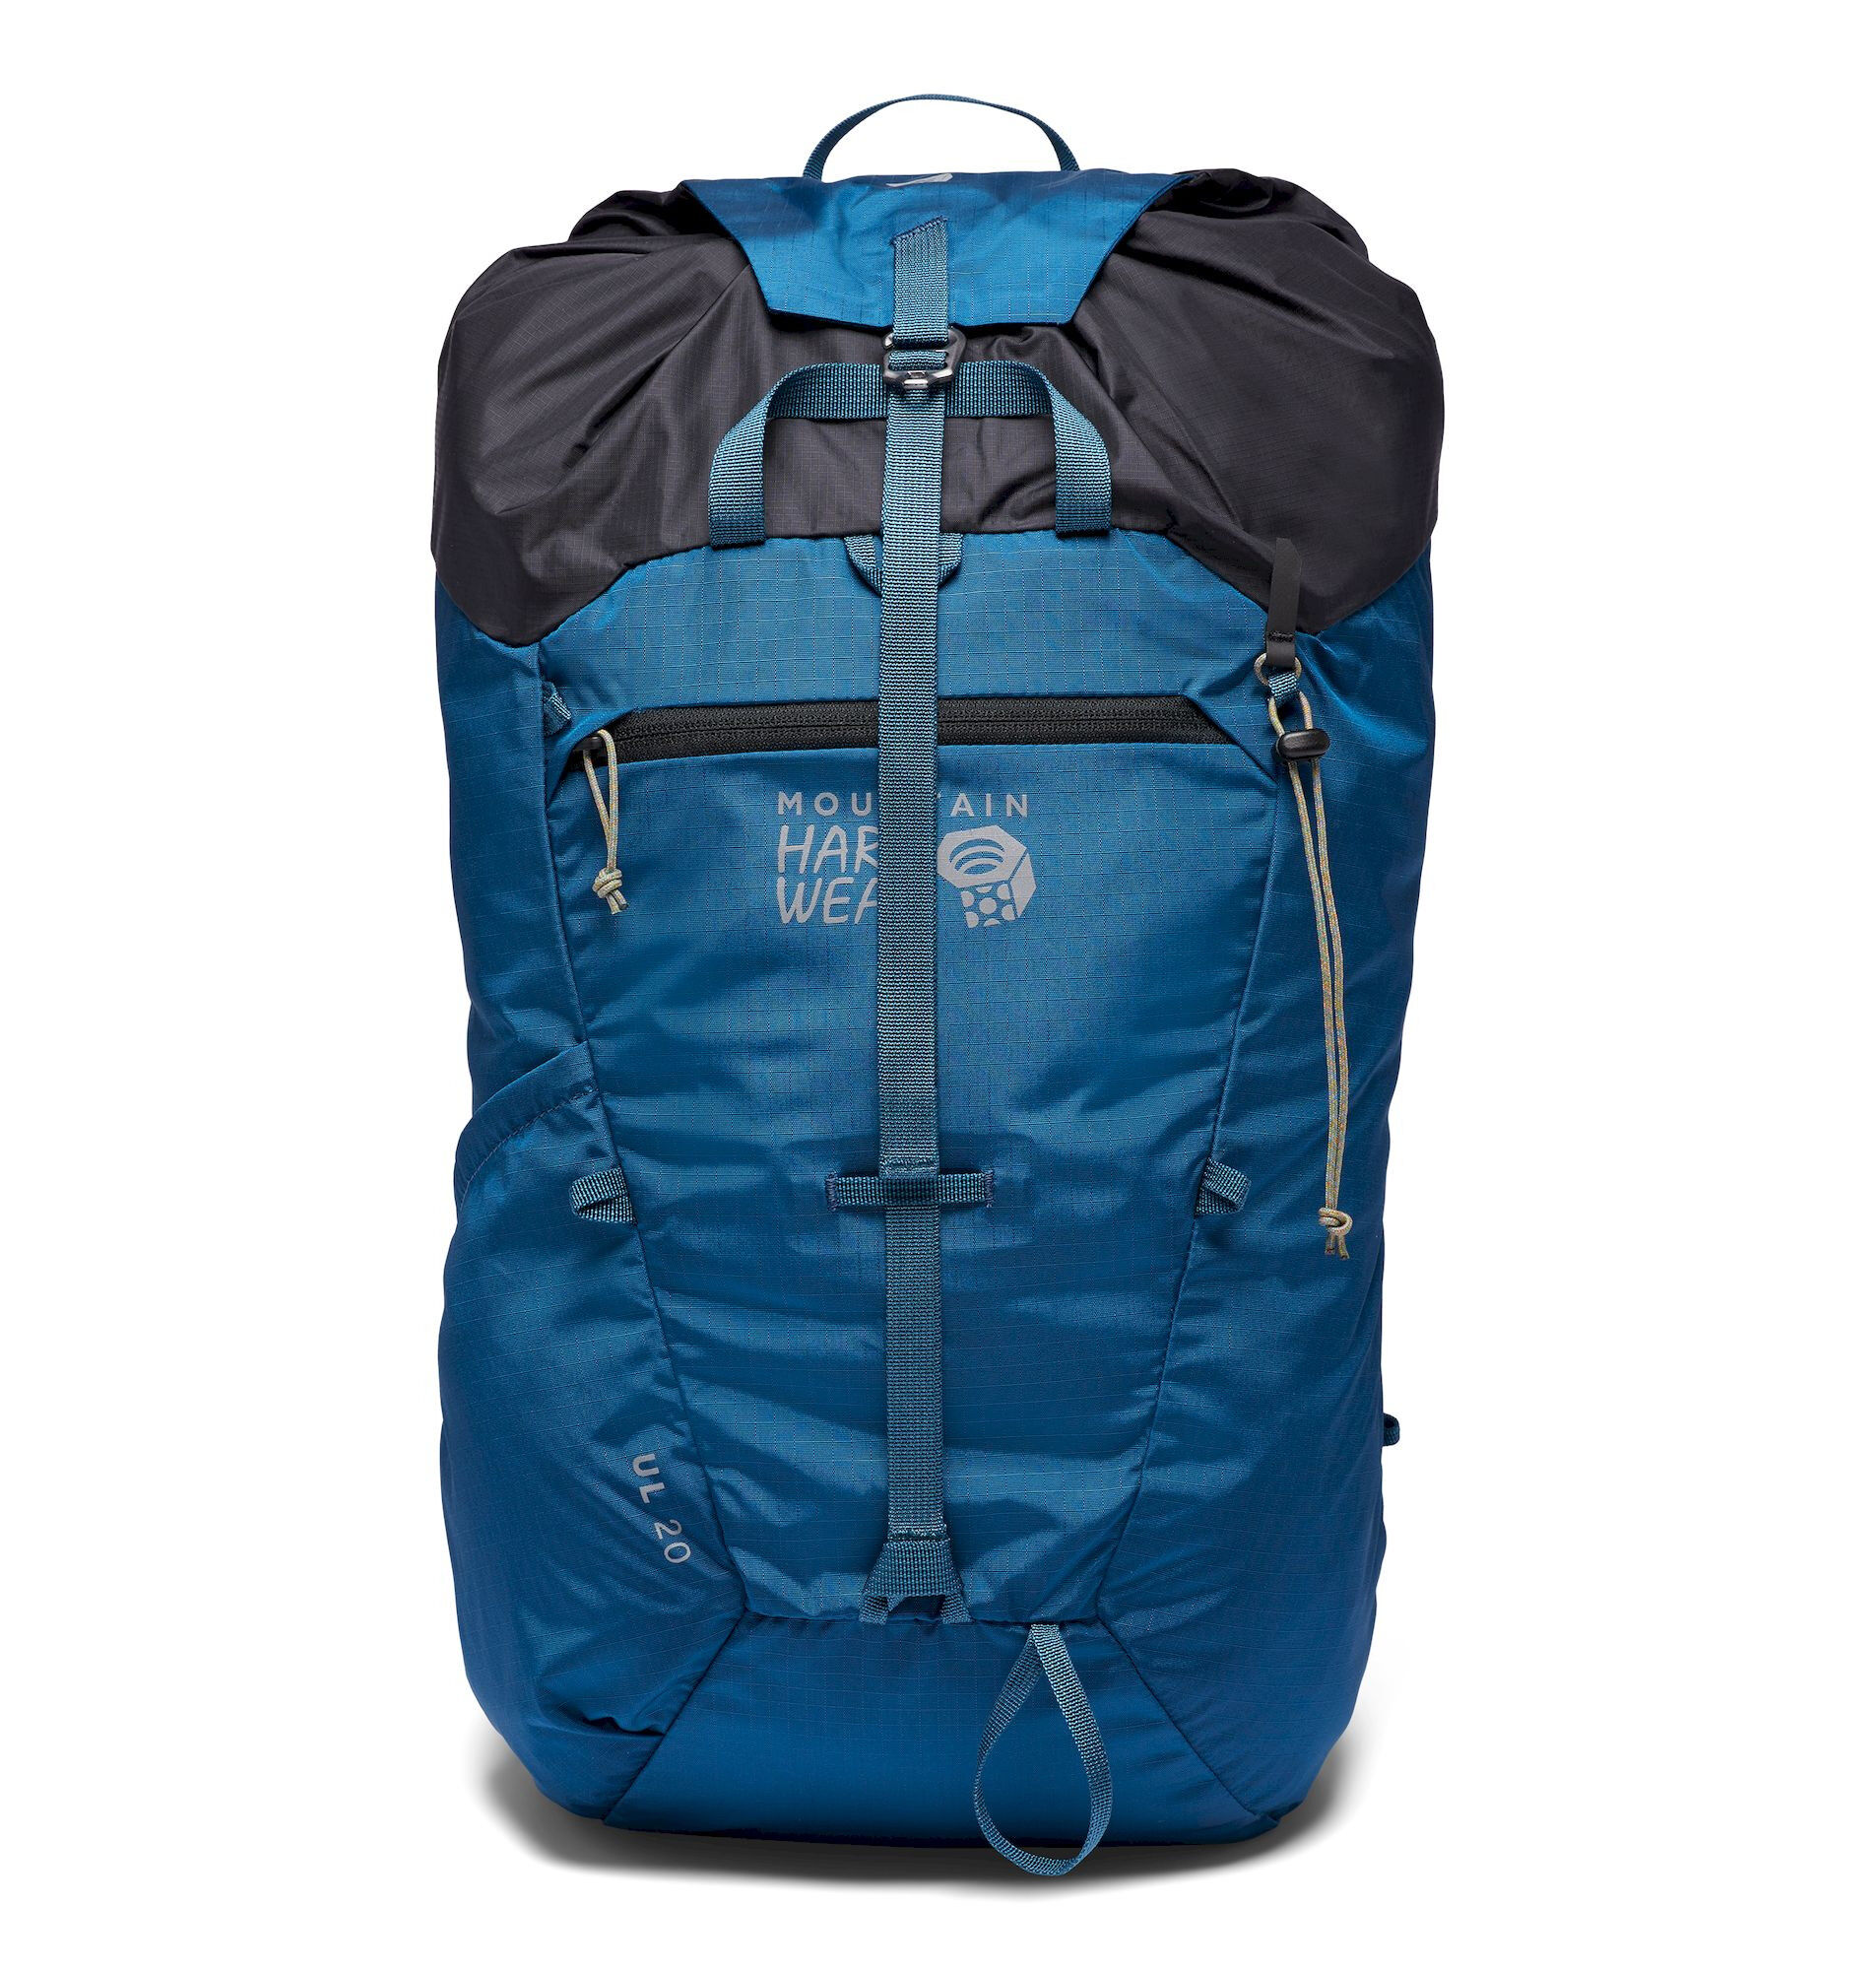 Mountain Hardwear UL 20 Backpack - Walking backpack